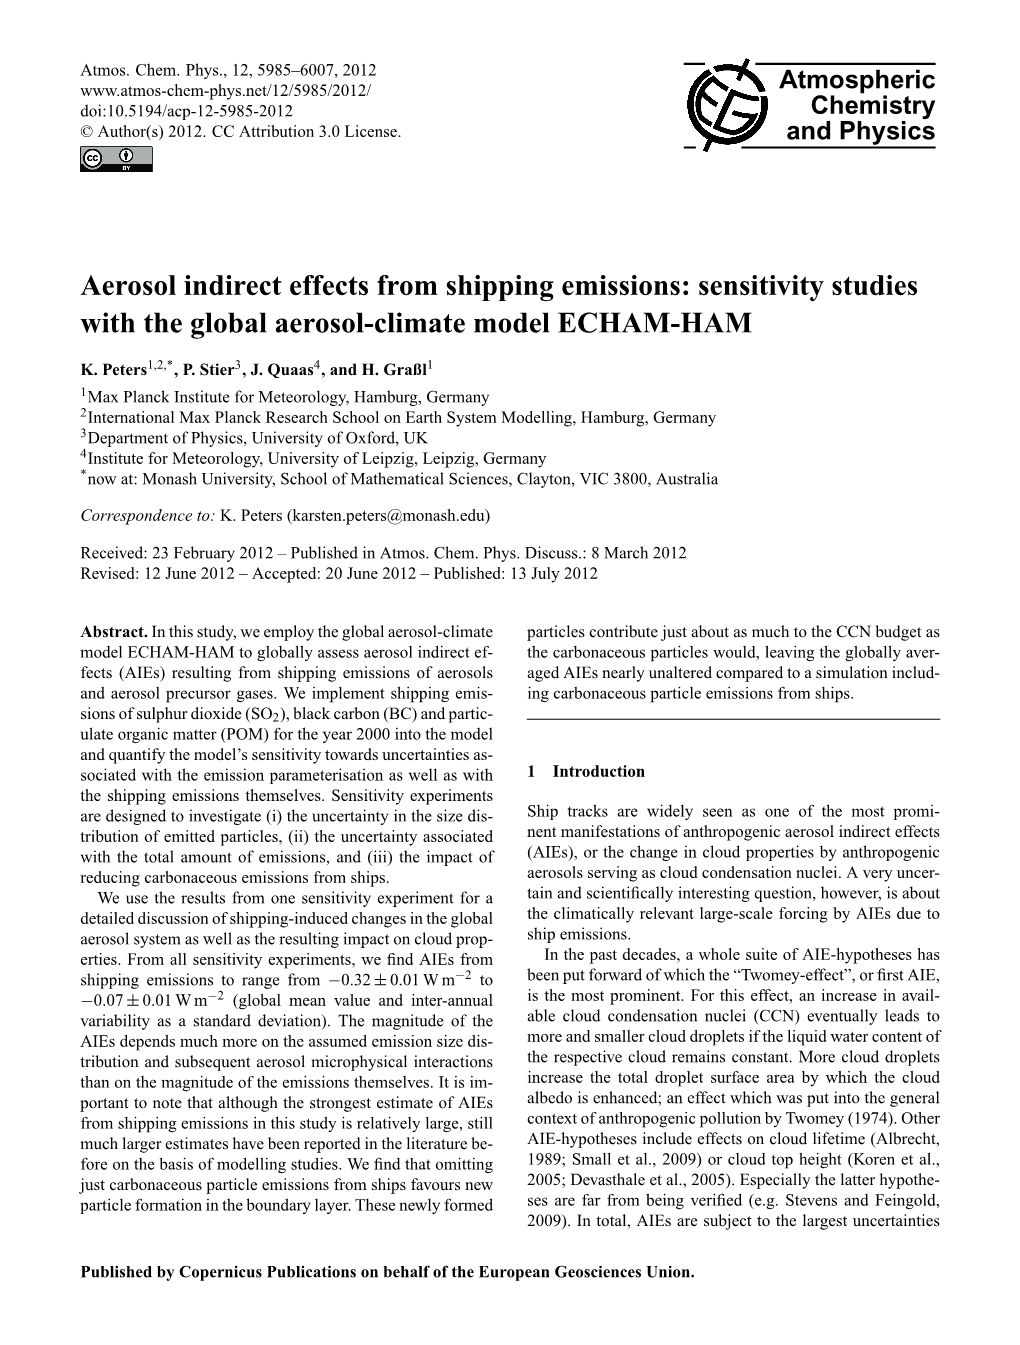 Aerosol Indirect Effects from Shipping Emissions: Sensitivity Studies with the Global Aerosol-Climate Model ECHAM-HAM